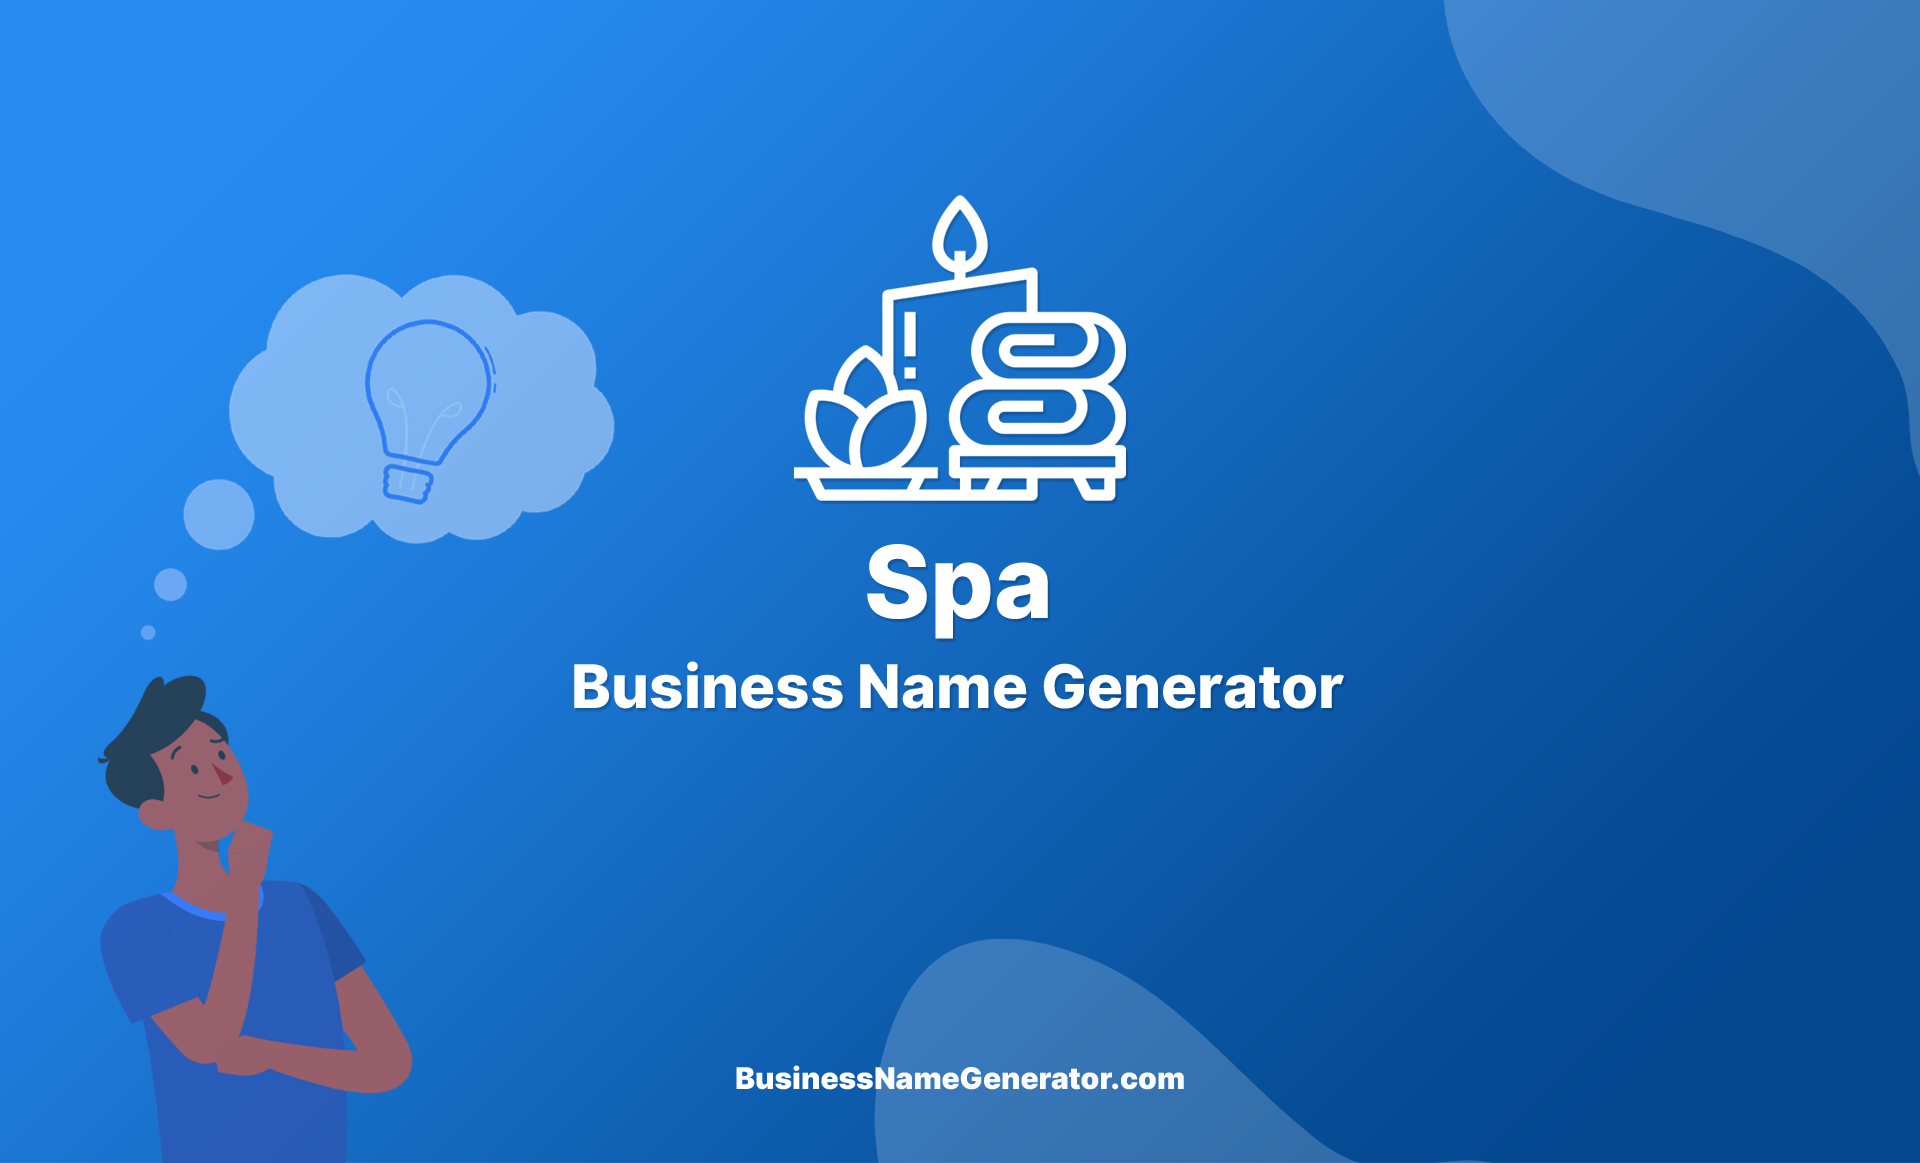 Spa Business Name Generator